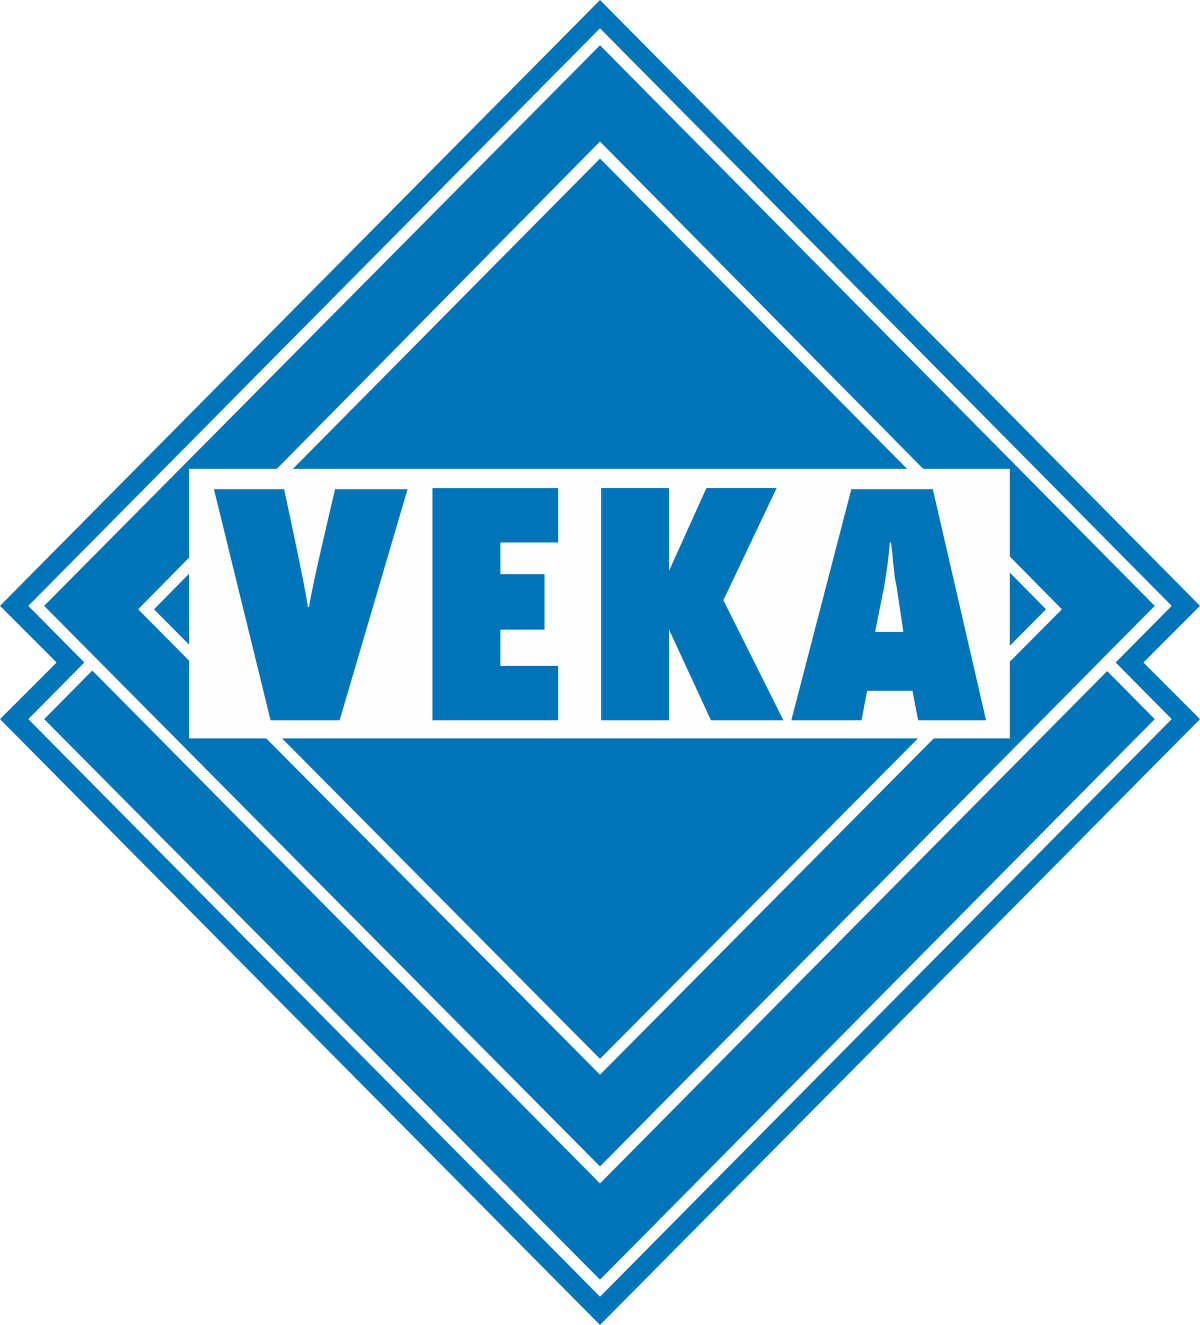 История компании Veka